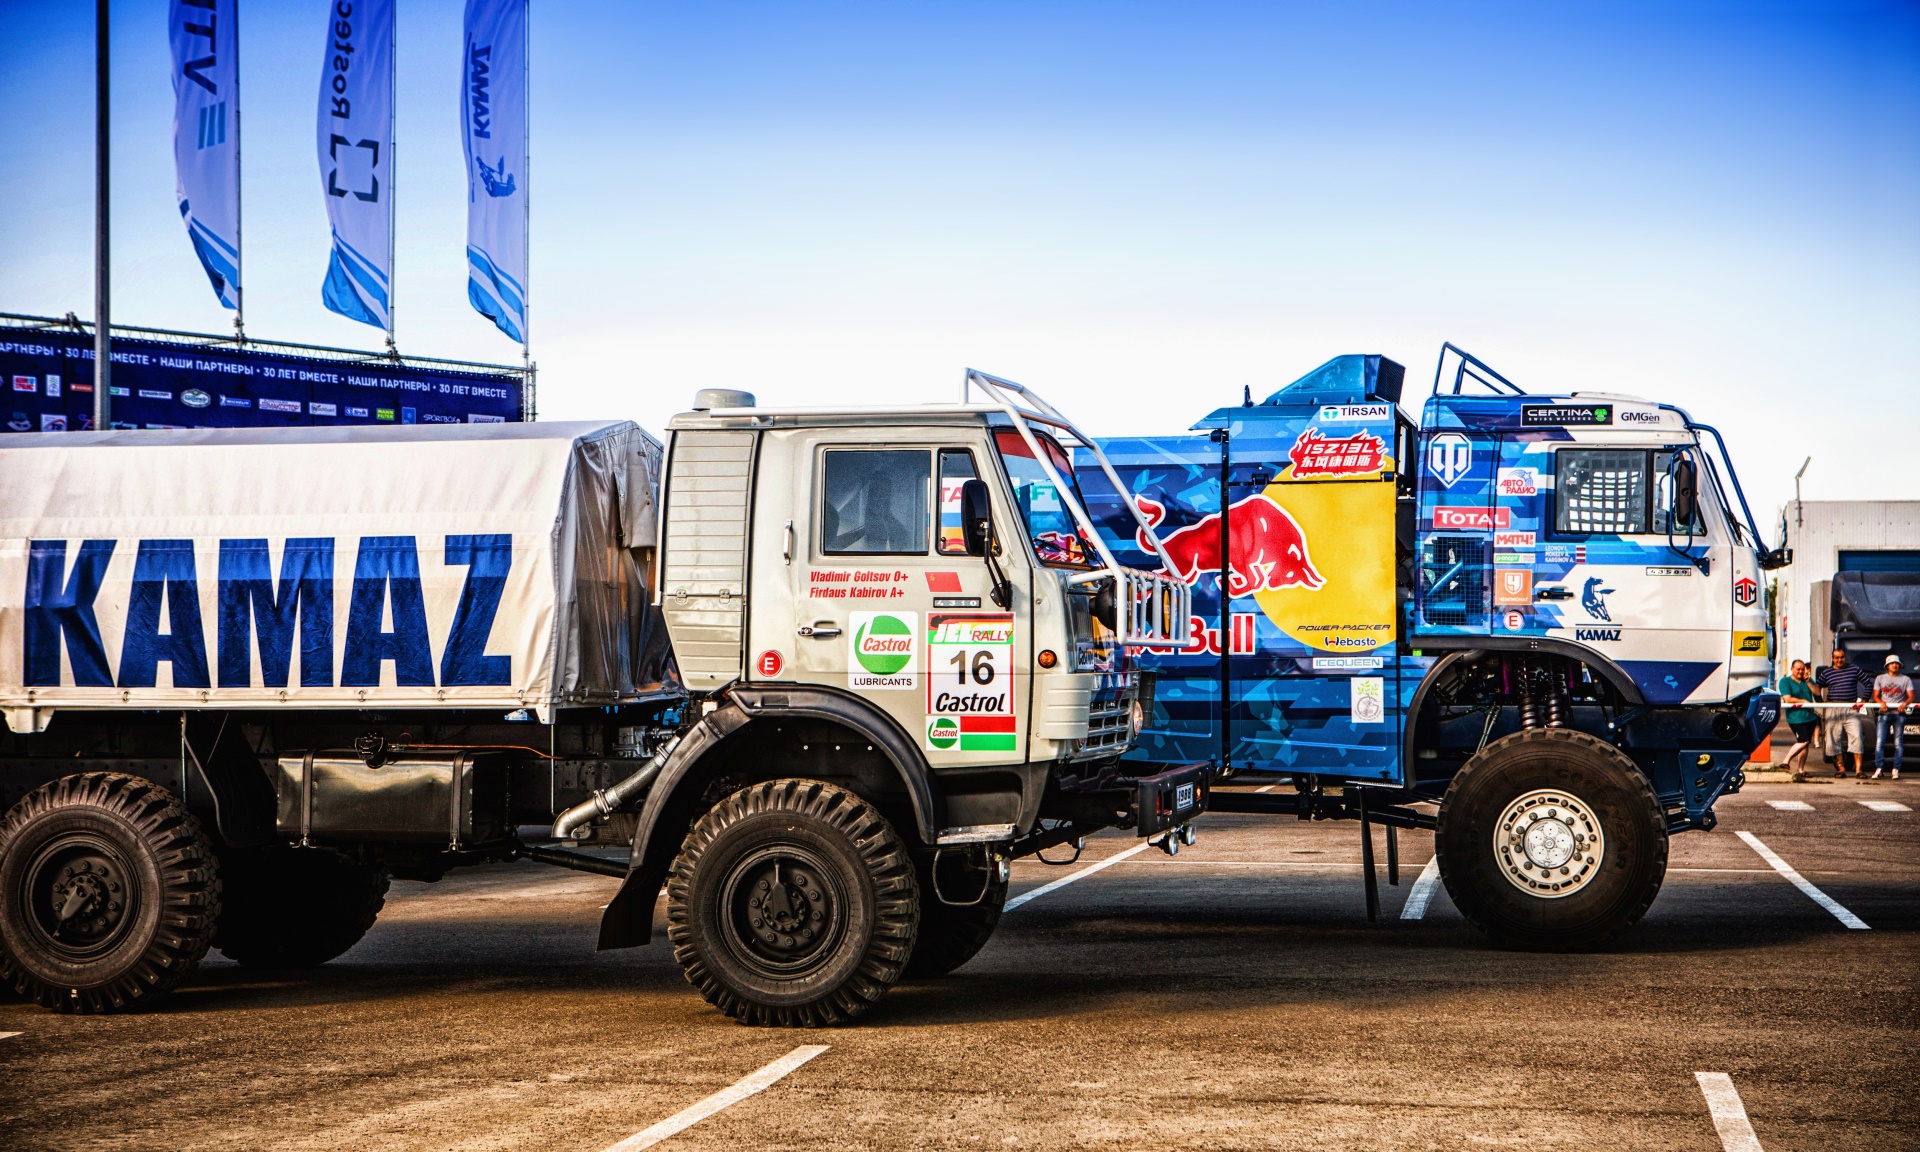 General 1920x1152 Rally truck vehicle Kamaz motorsport sport flag Russian